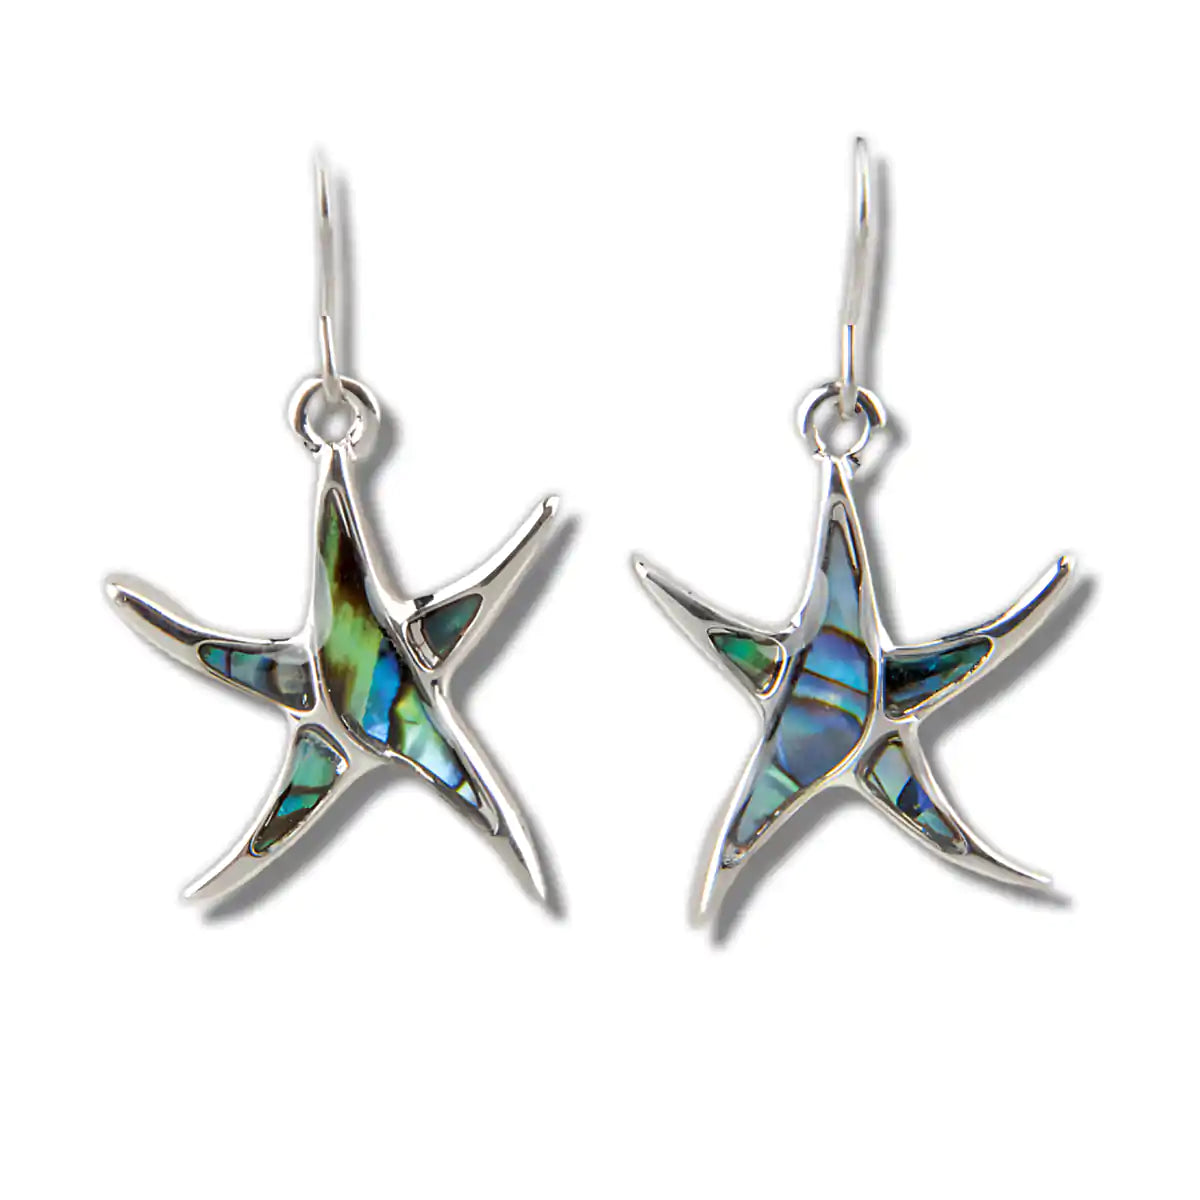 Glacier pearle sea star earrings